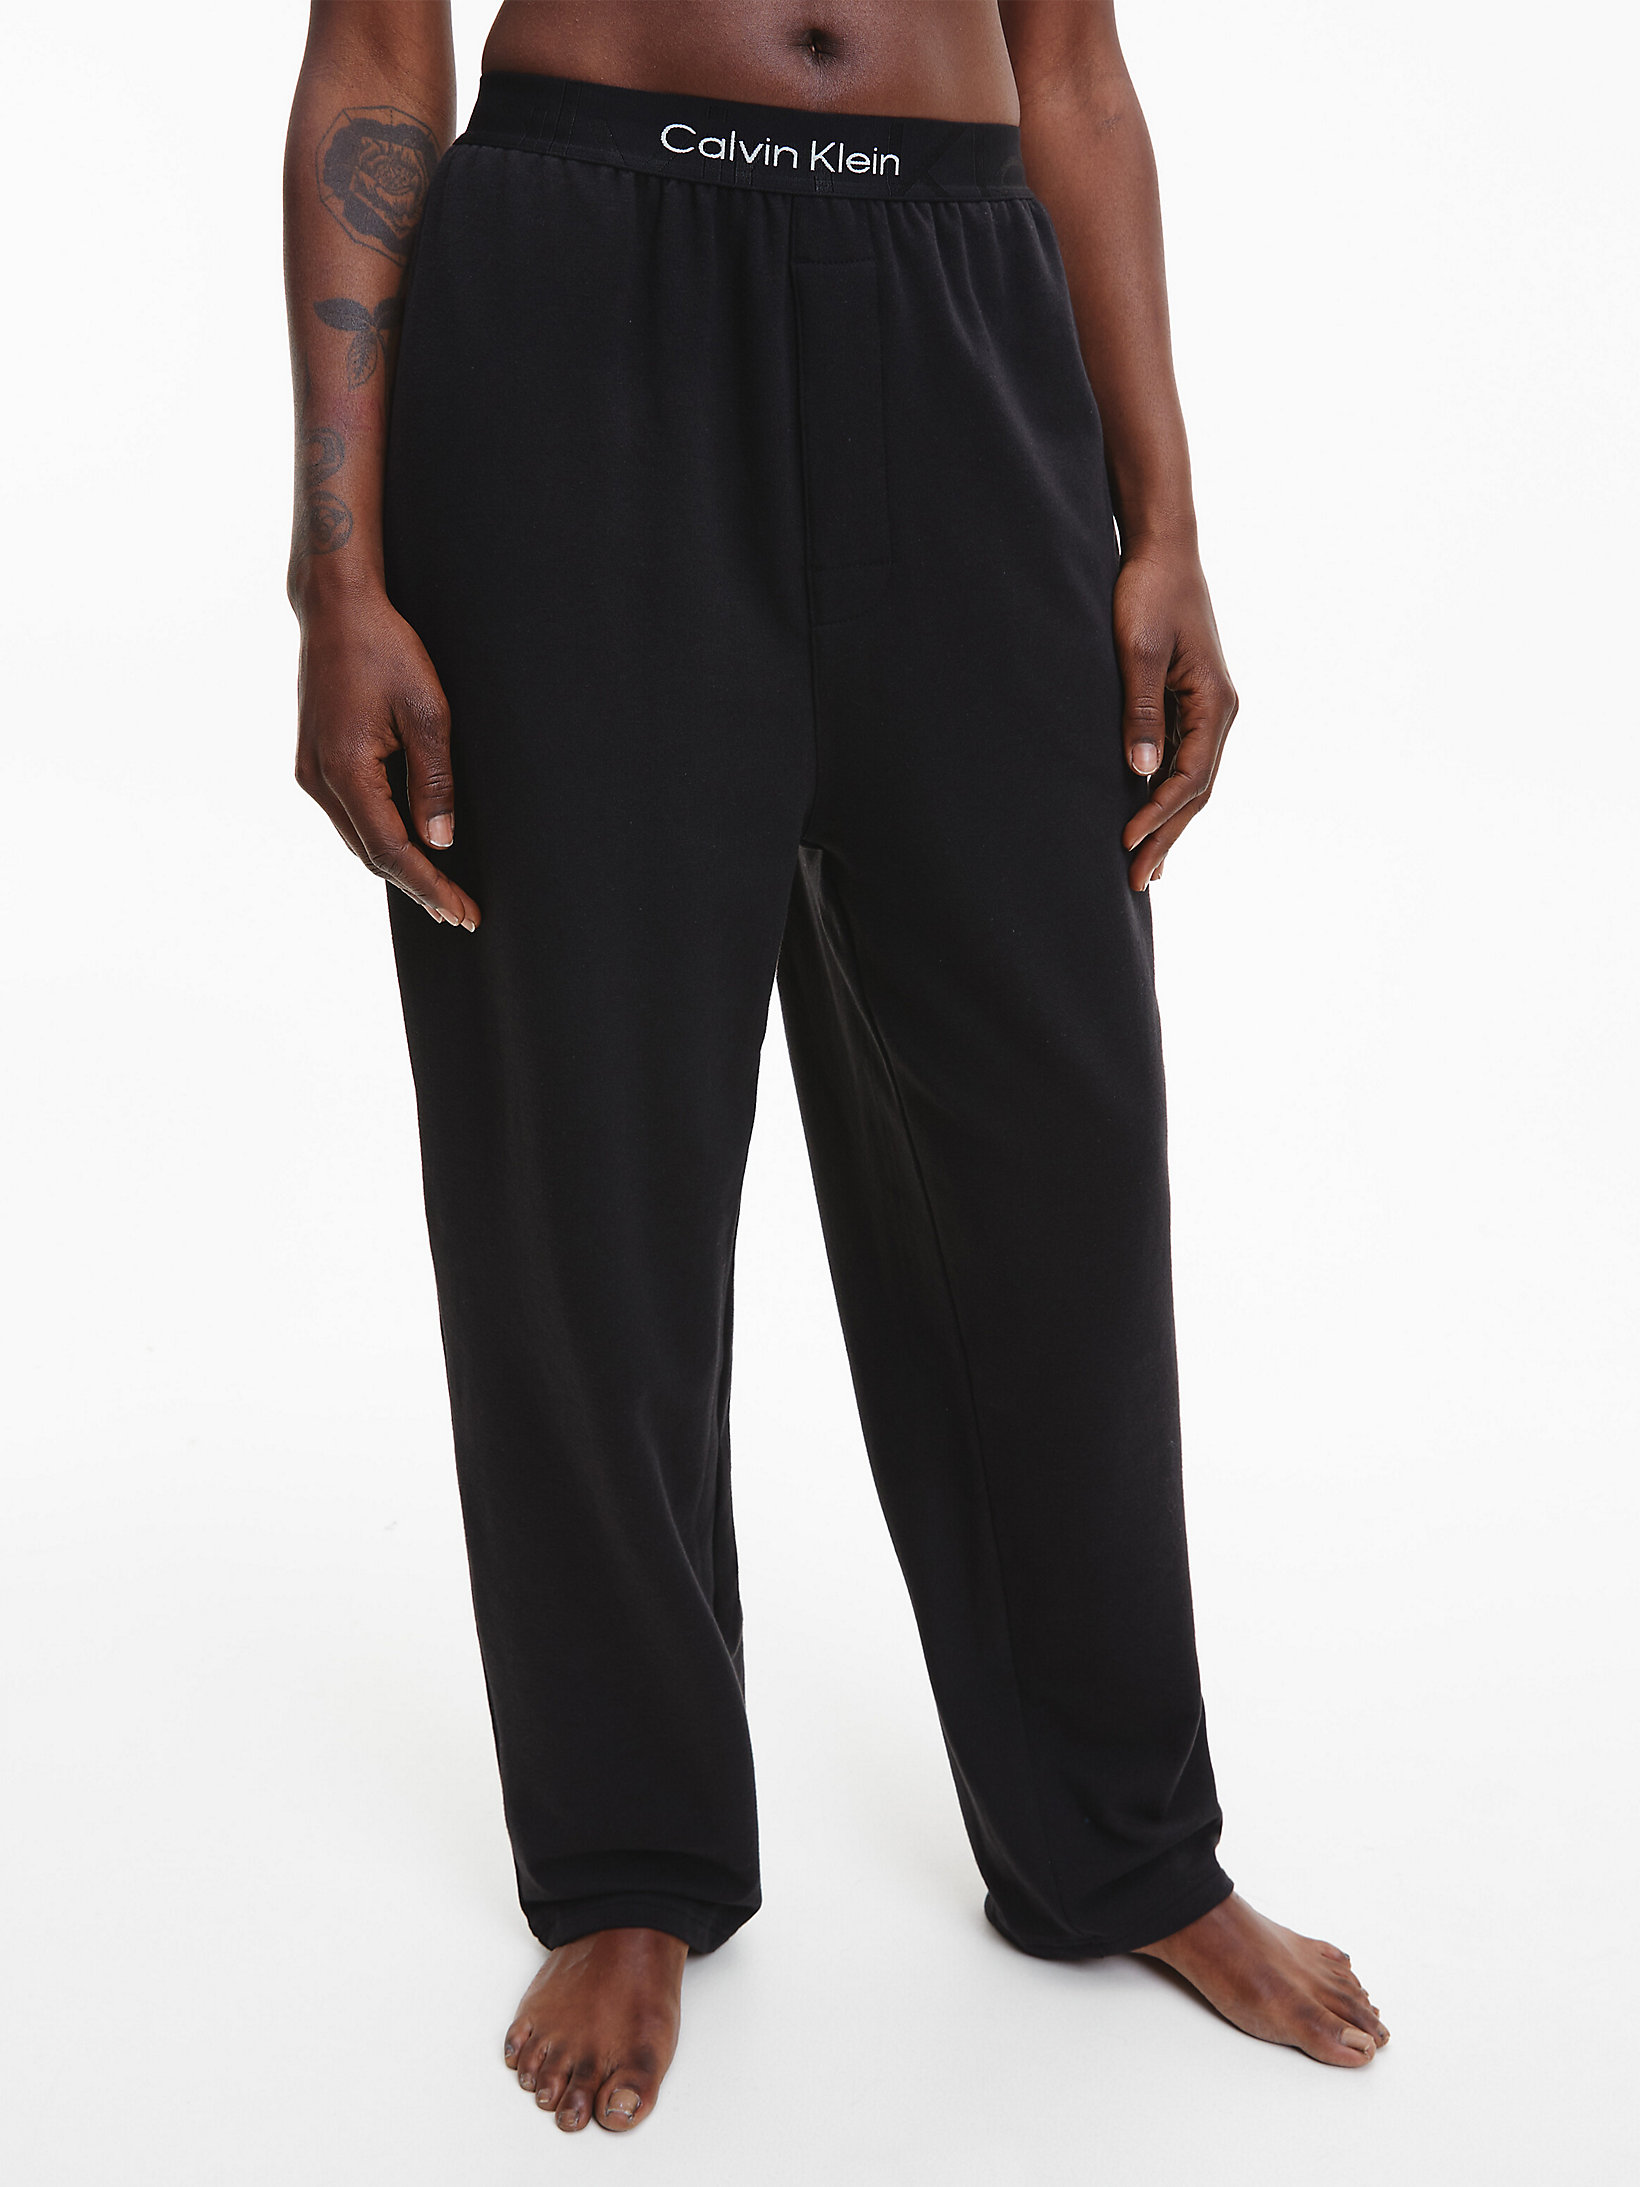 Black > Пижамные штаны - Embossed Icon > undefined Женщины - Calvin Klein